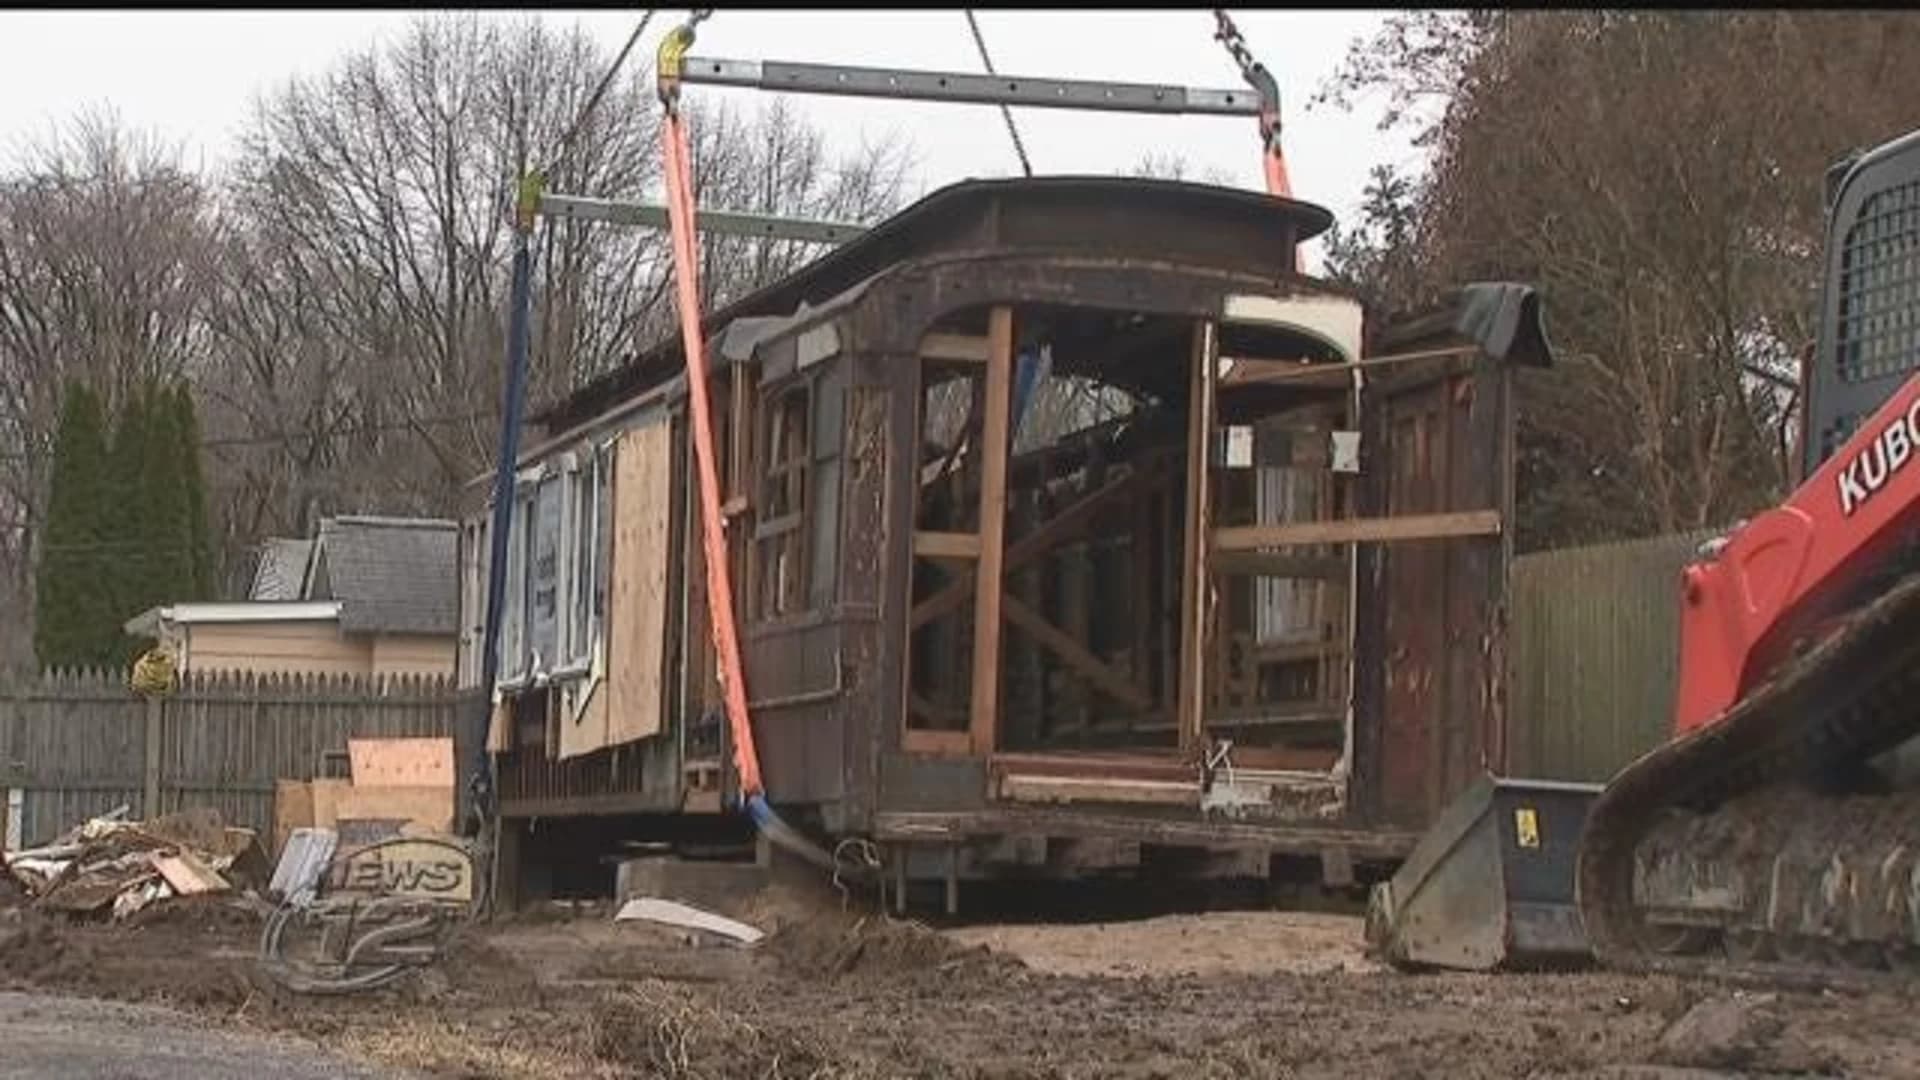 Hidden treasure: Antique trolley car found inside Mercer County home